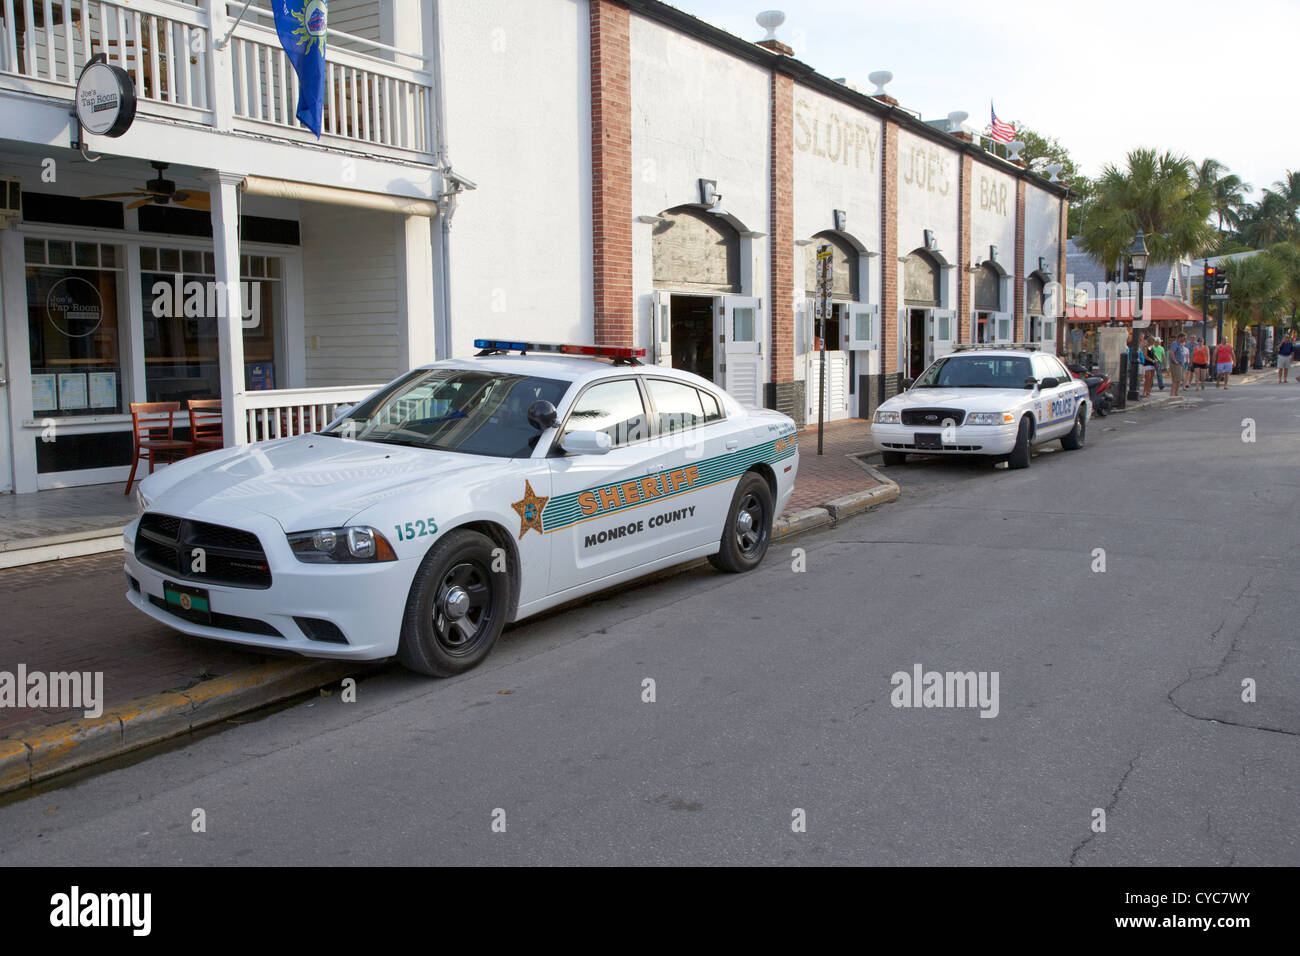 Monroe county Sheriff und Key West Polizei patrouillieren Streifenwagen Key West Florida usa Stockfoto